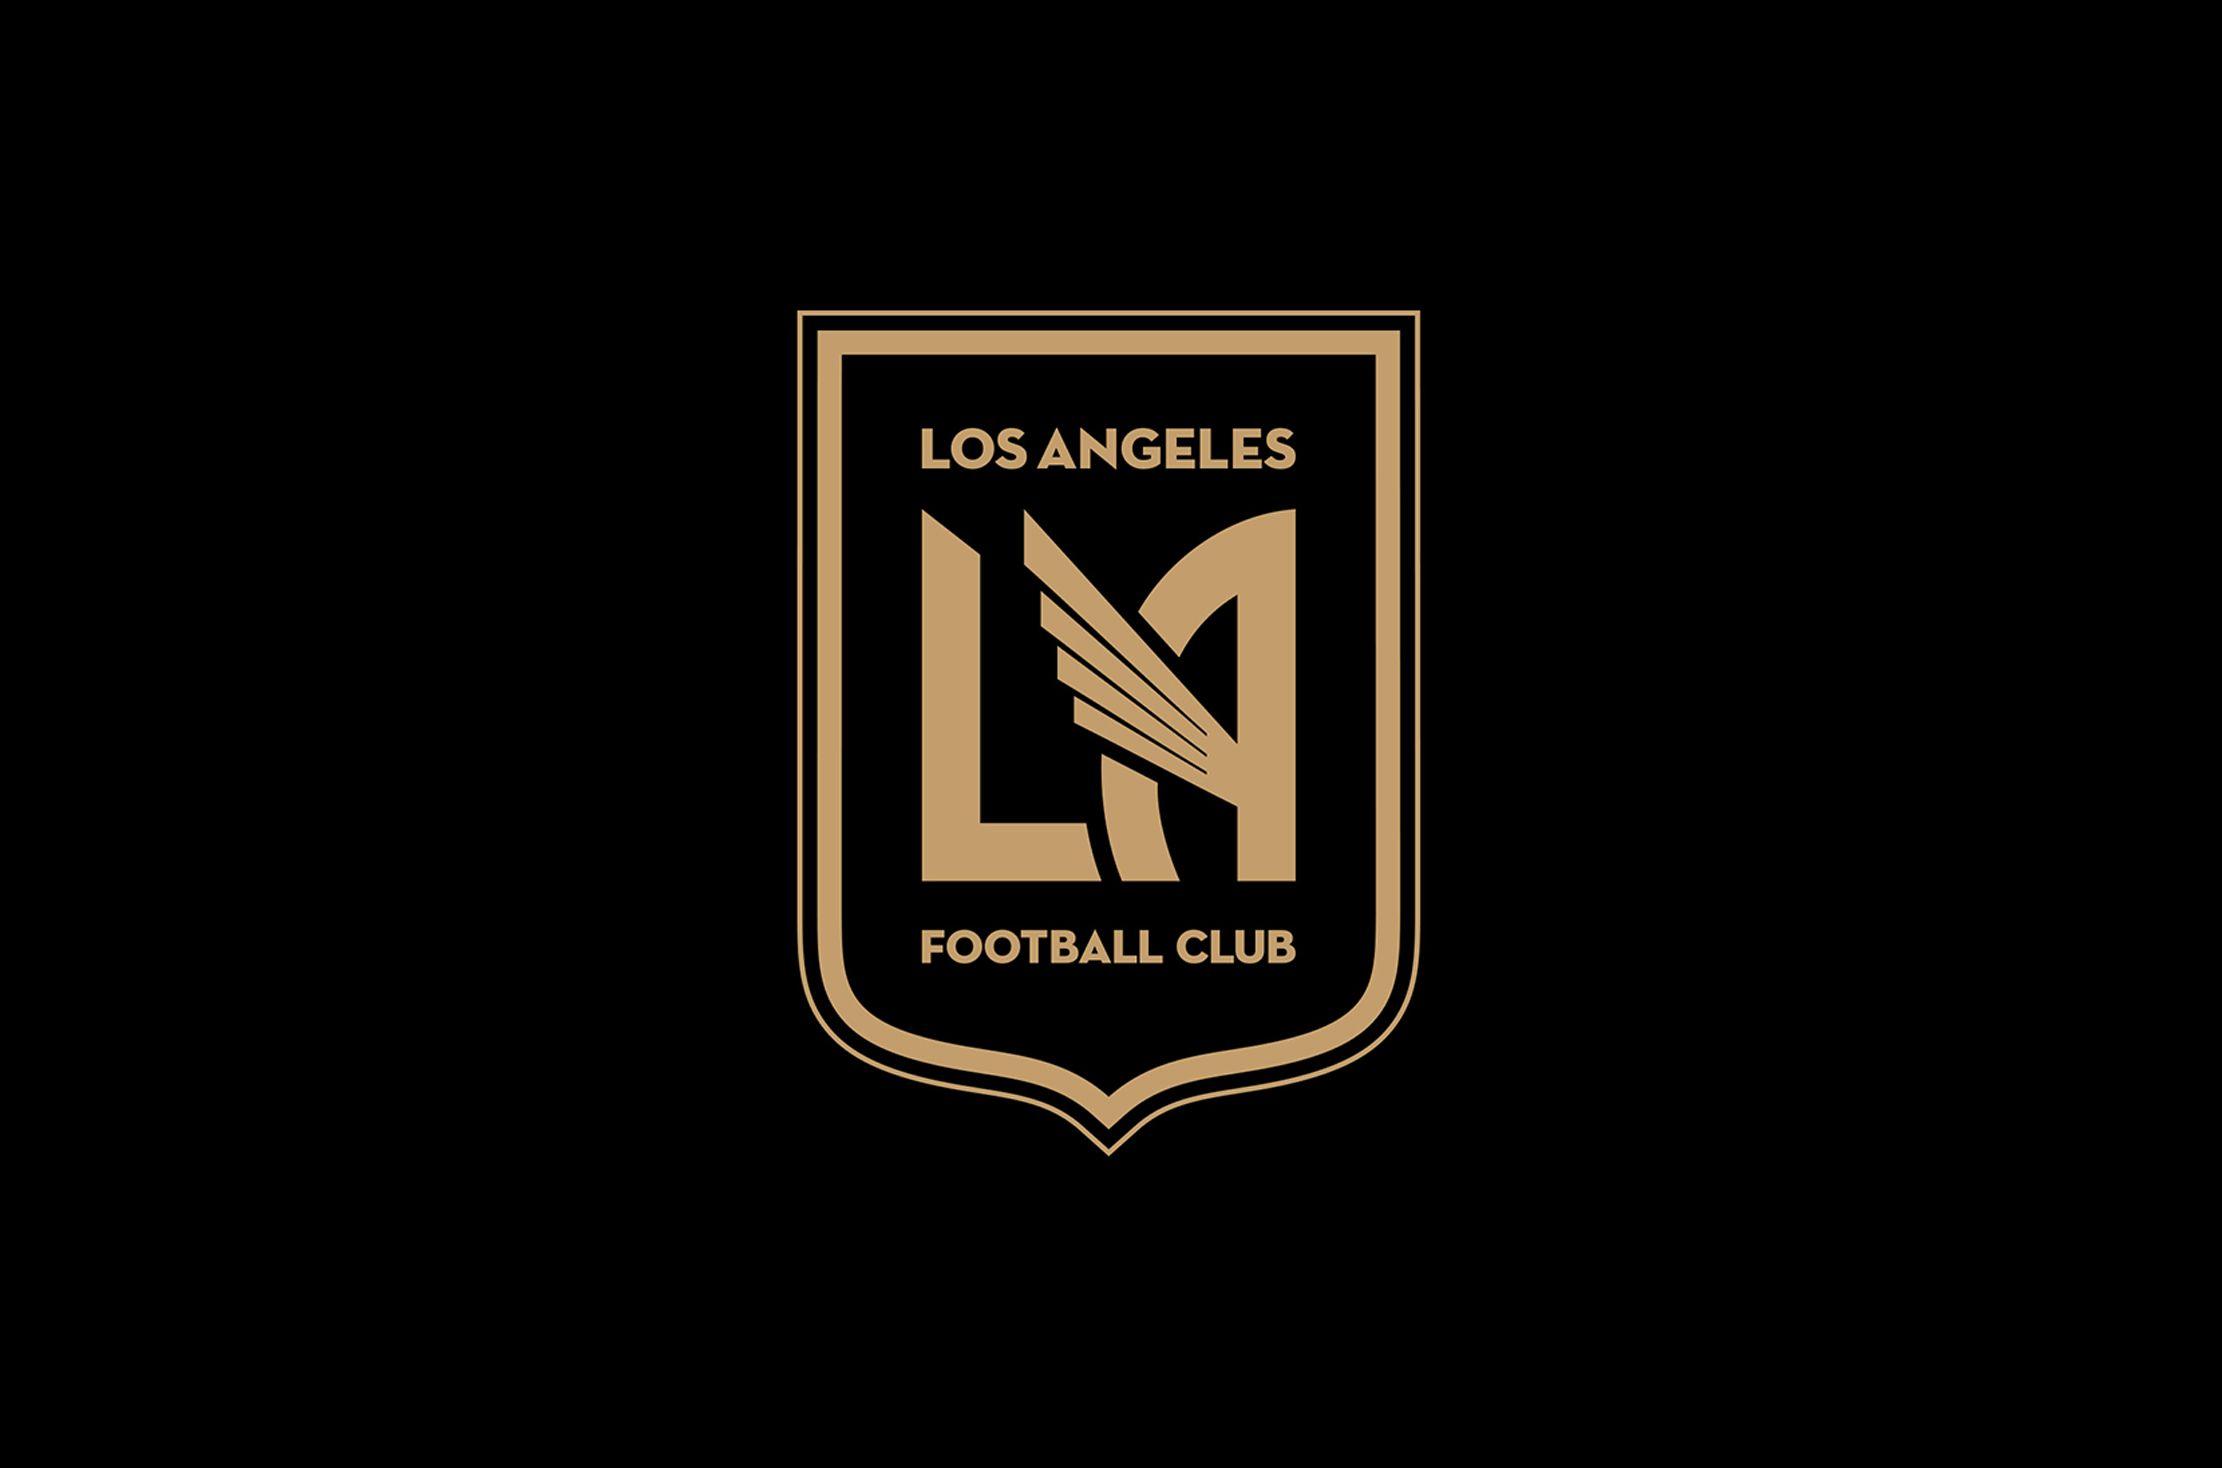 Soccer Crest Logo - A Logo Design from Scratch: The L.A. Soccer Team's Mark - HOW Design